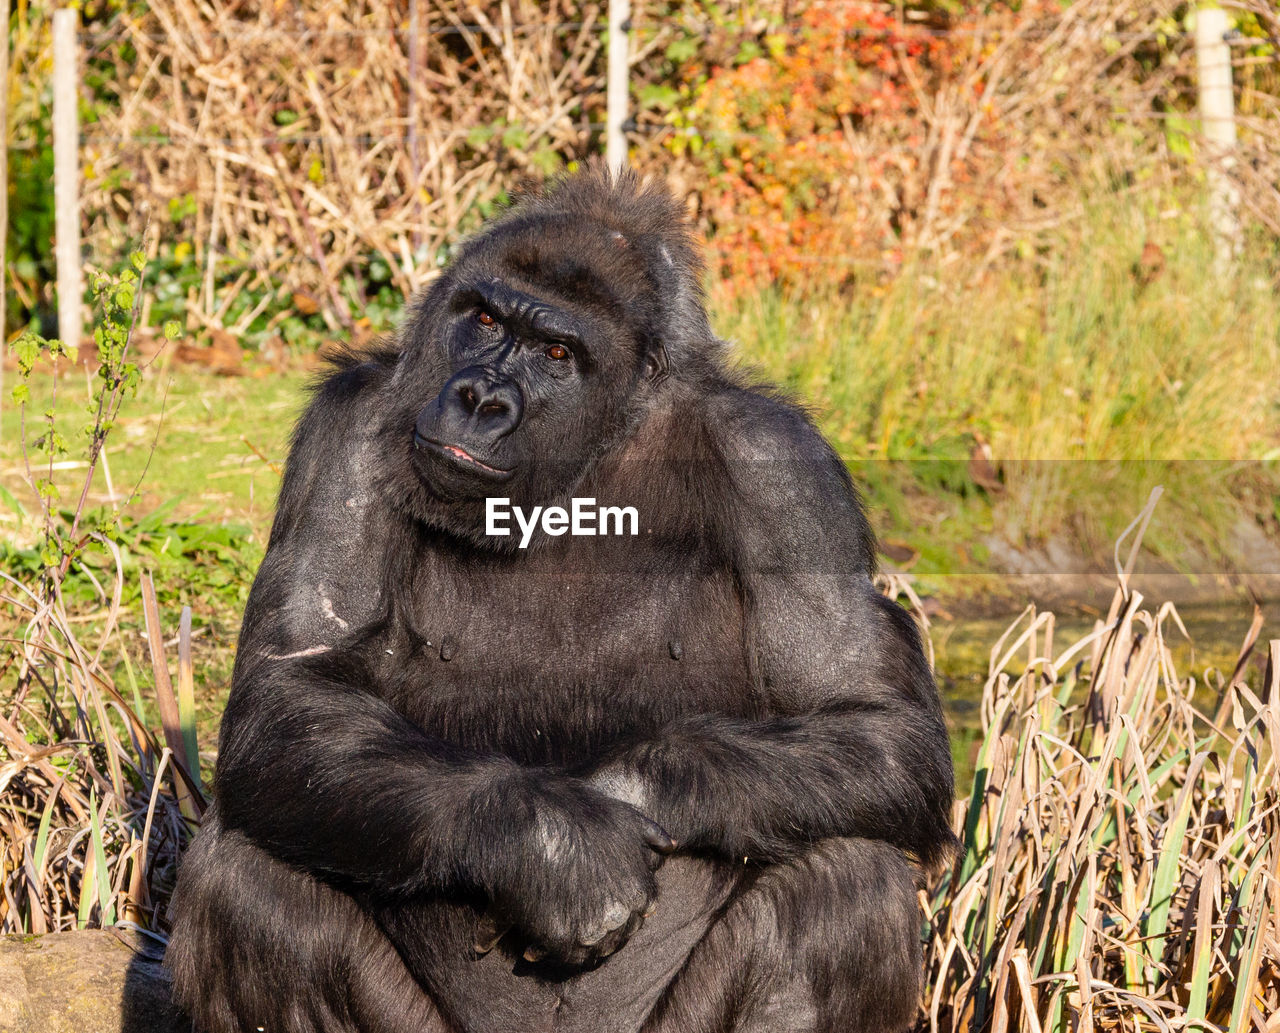 Portrait of gorilla sitting outdoors